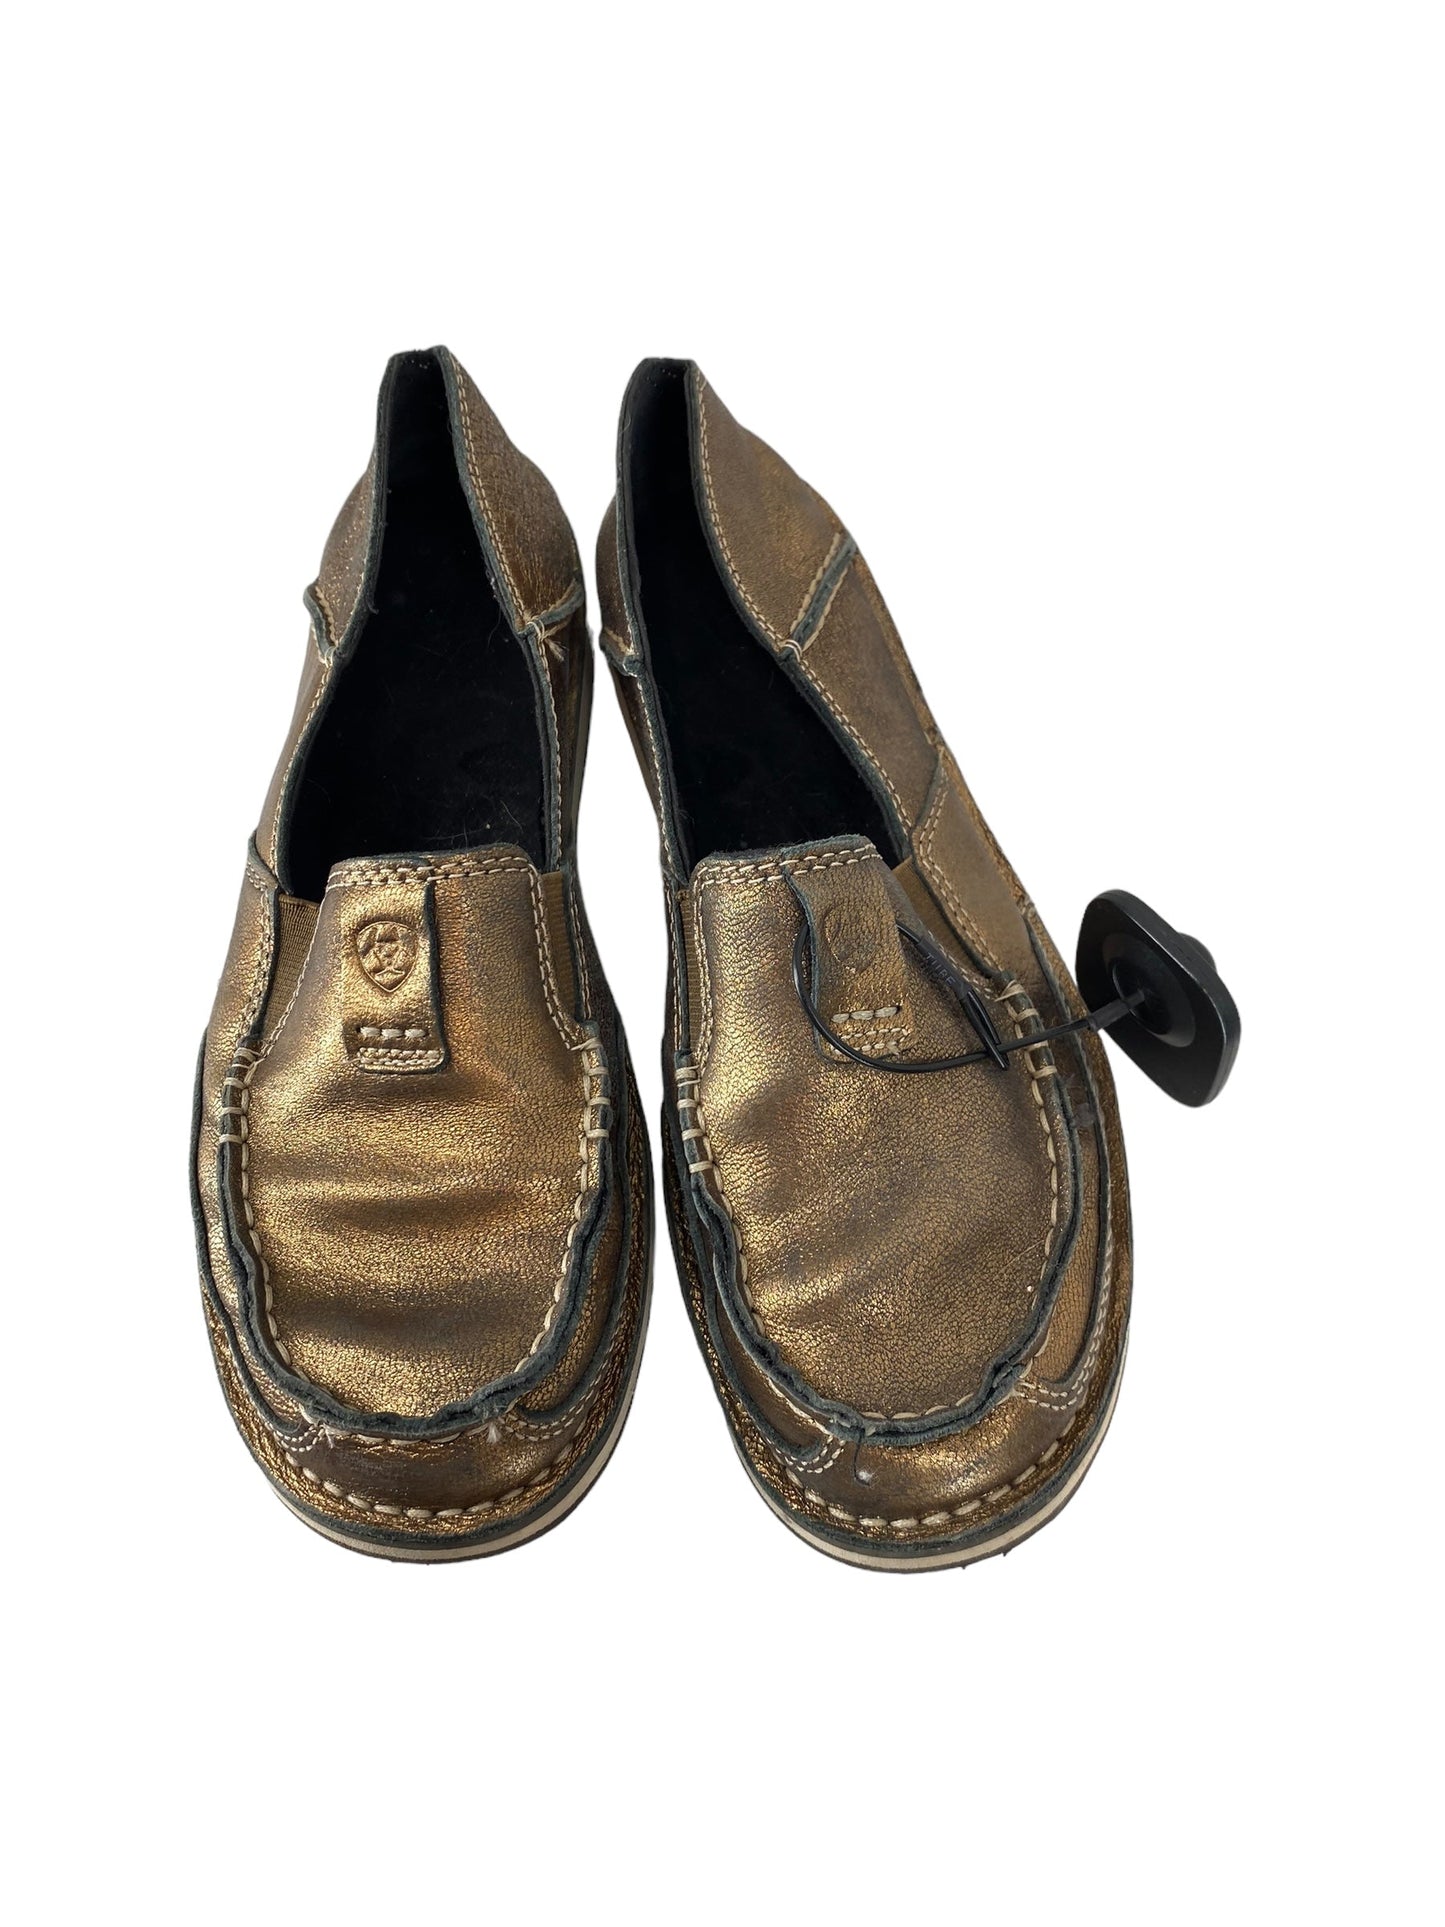 Bronze Shoes Flats Ariat, Size 7.5